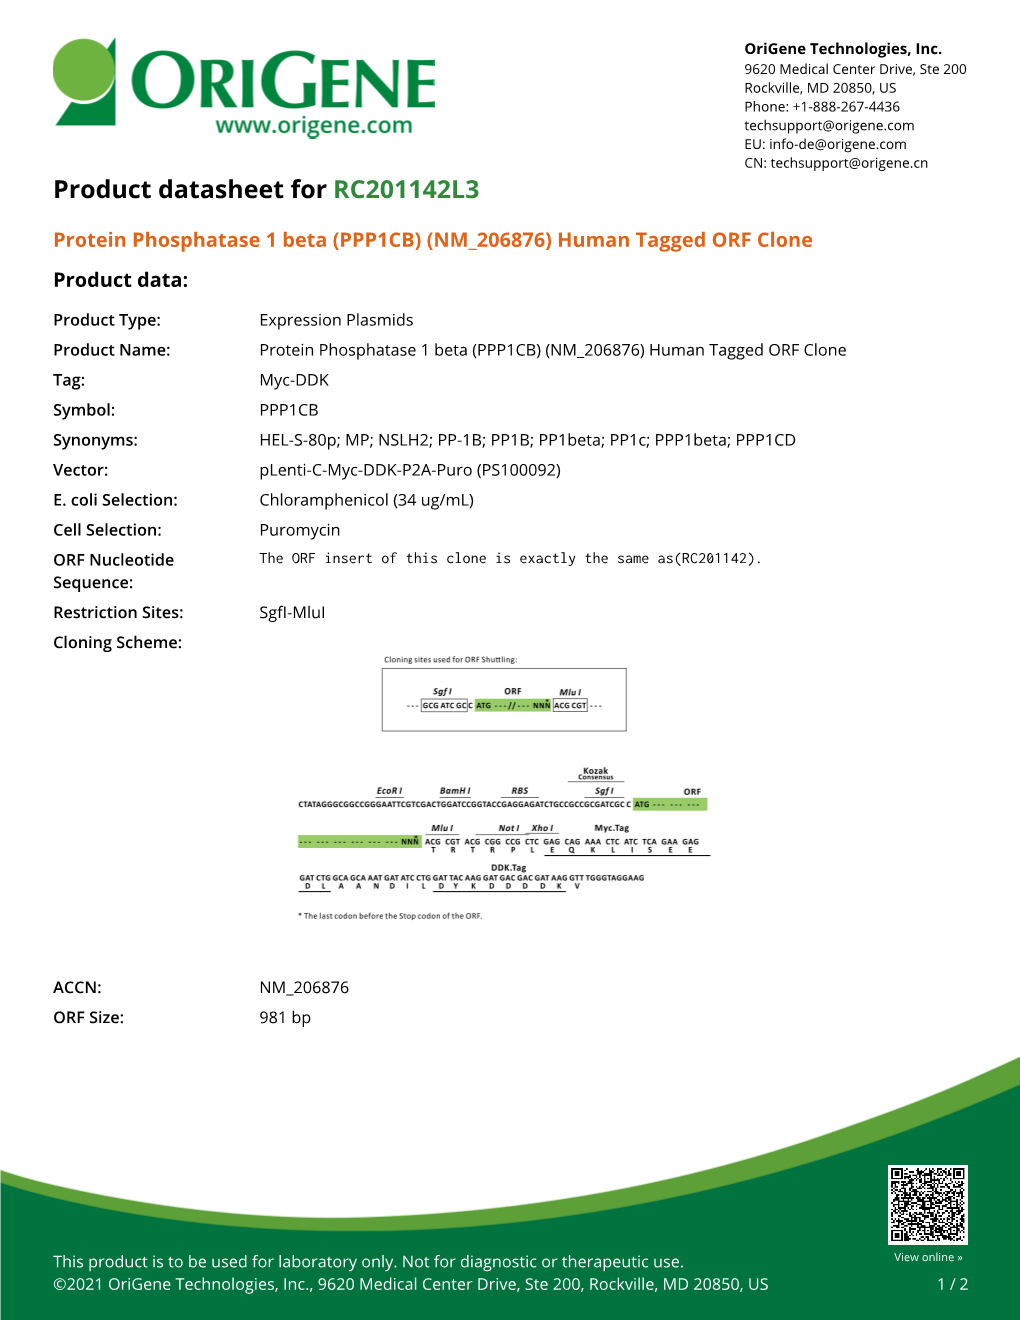 (PPP1CB) (NM 206876) Human Tagged ORF Clone – RC201142L3